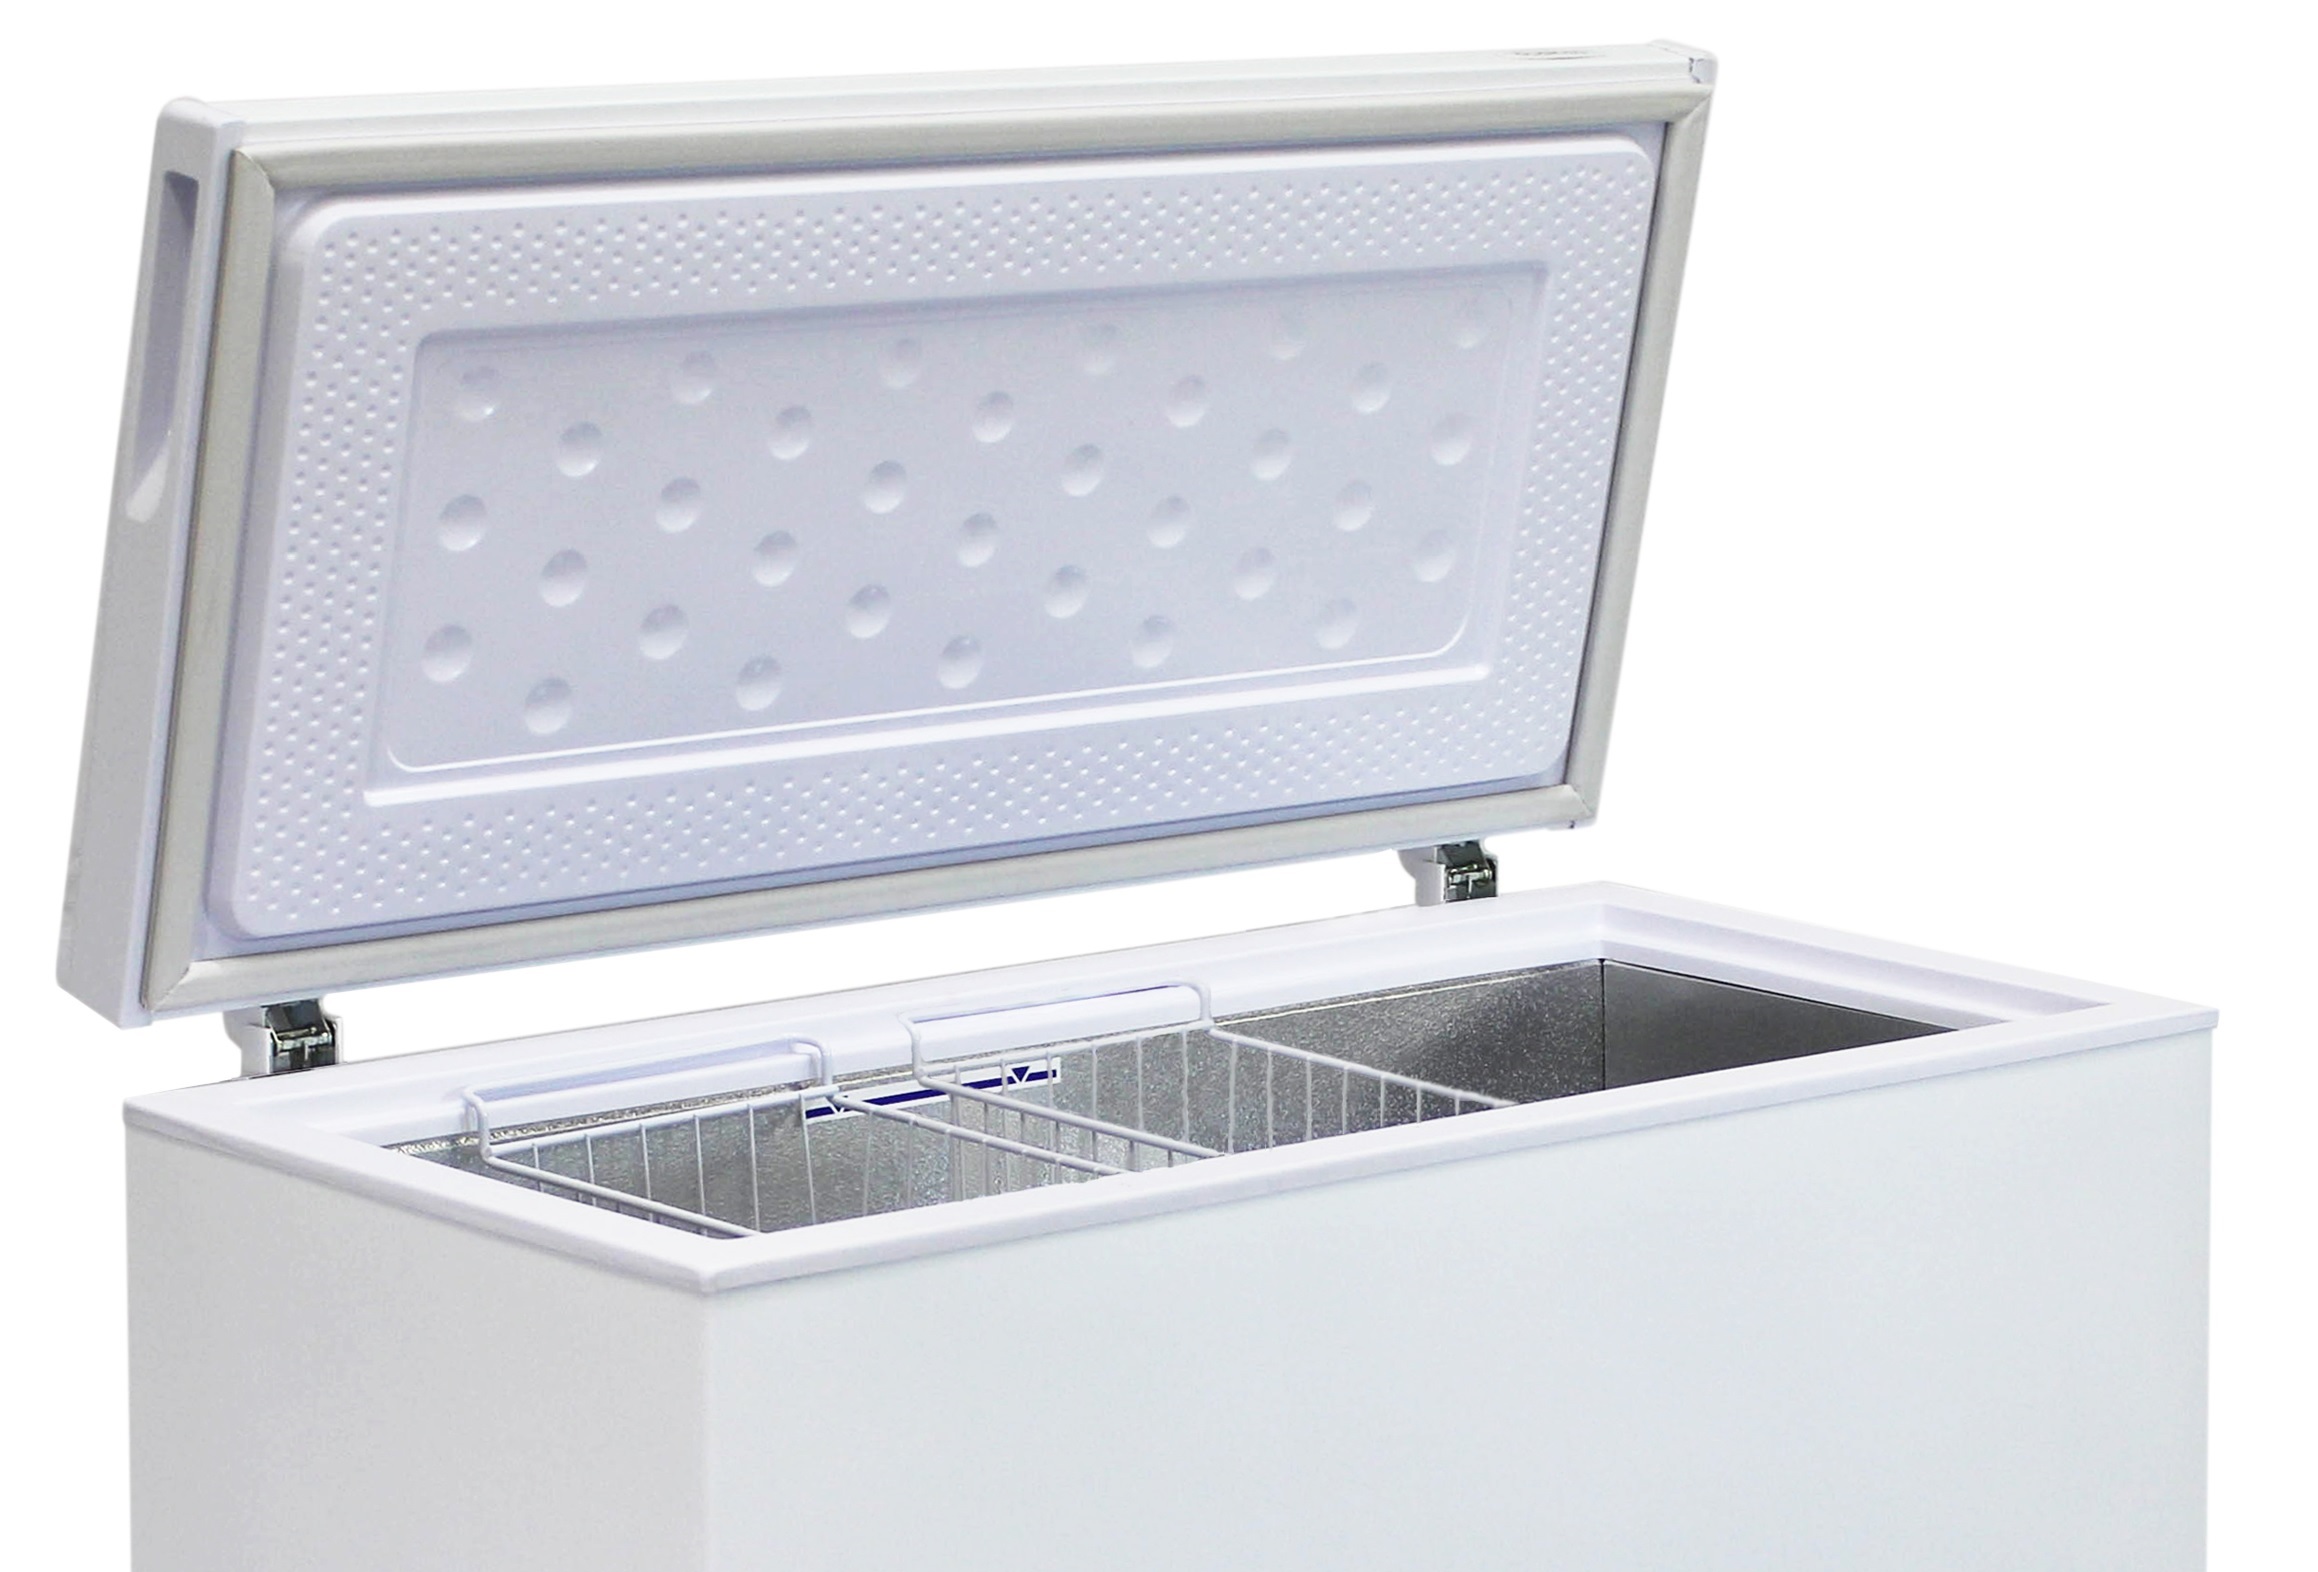 шкаф холодильный типа ларь бирюса 285kx